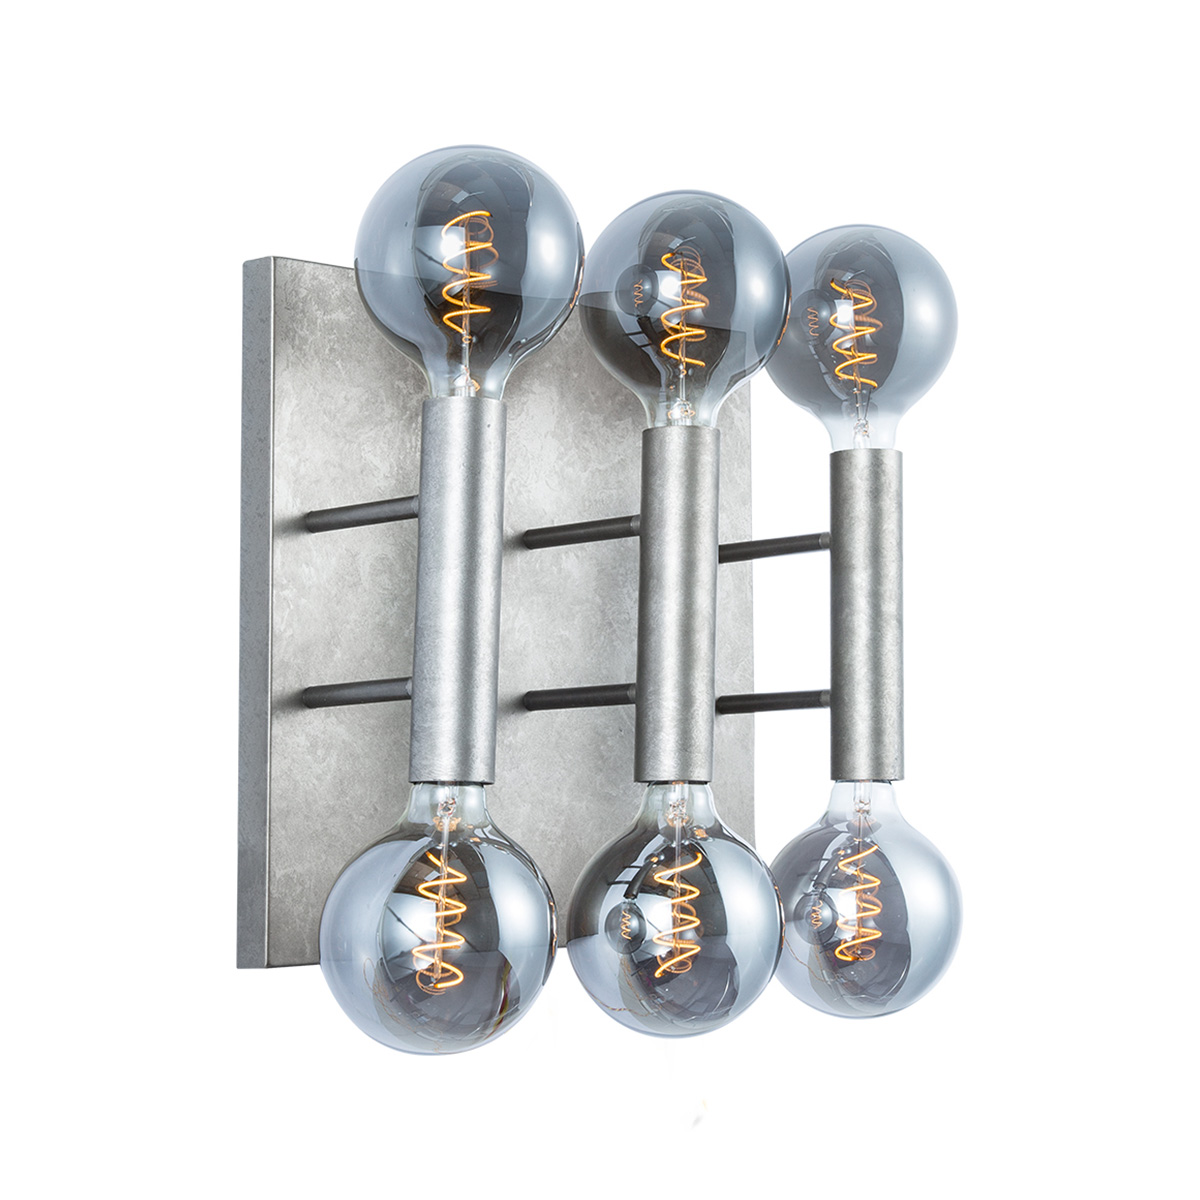 Tangla lighting - TLW5010-06GM - LED wall lamp 6 Lights - metal in burned metal - pillar - E27